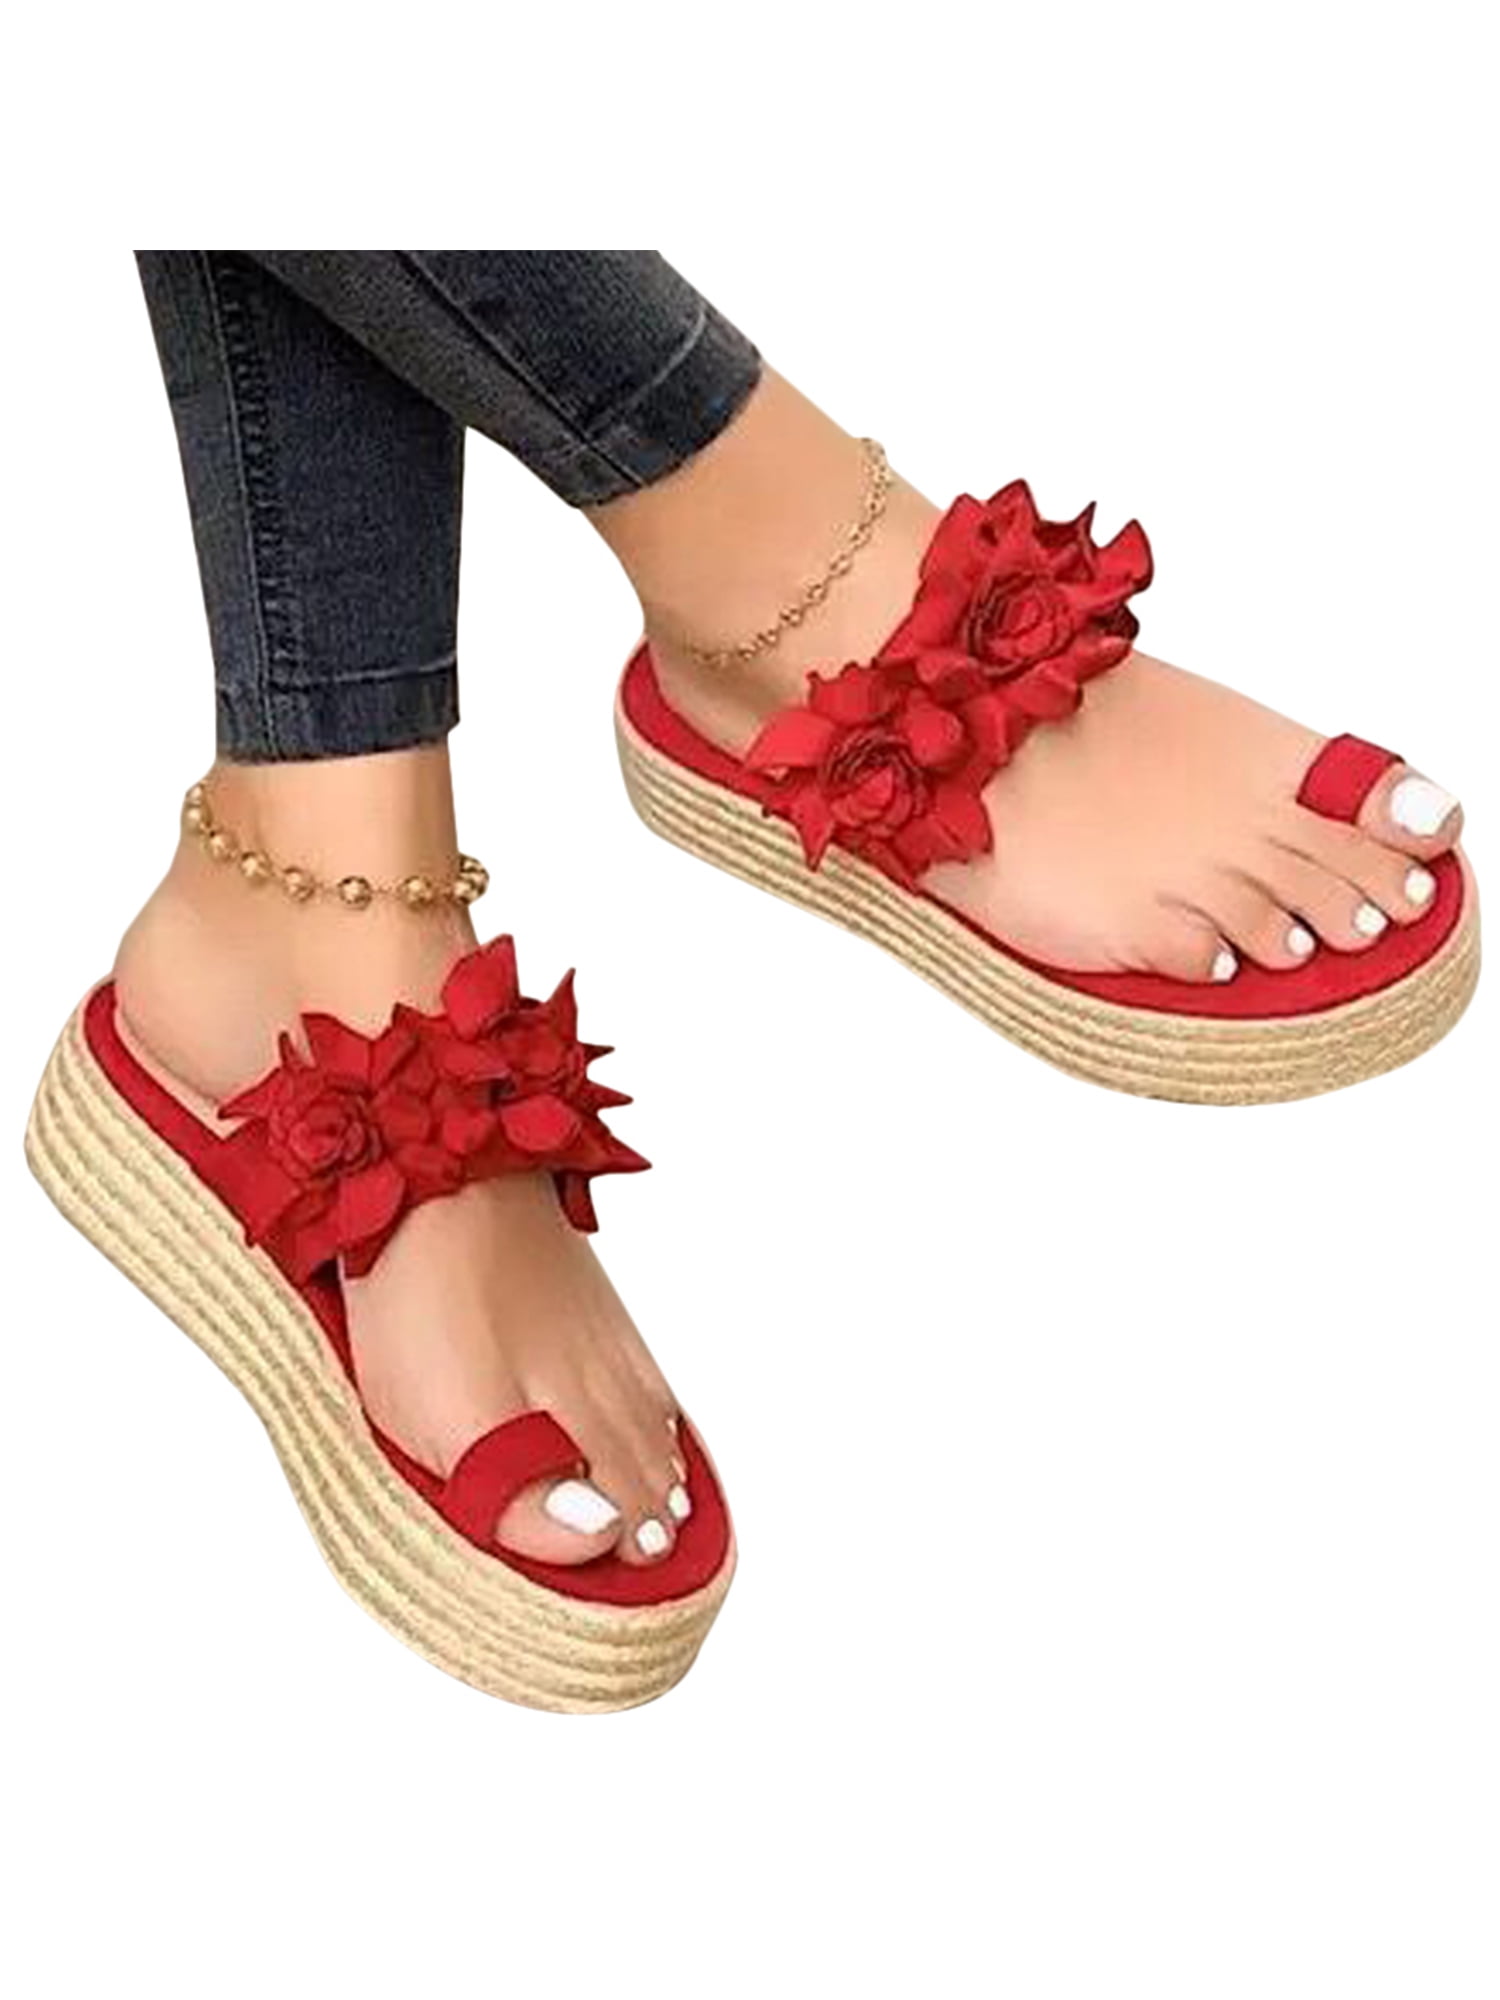 UK Hot Women Platform Sandals Wedge Slippers Flip Flops Toe Ring Summer Shoes 